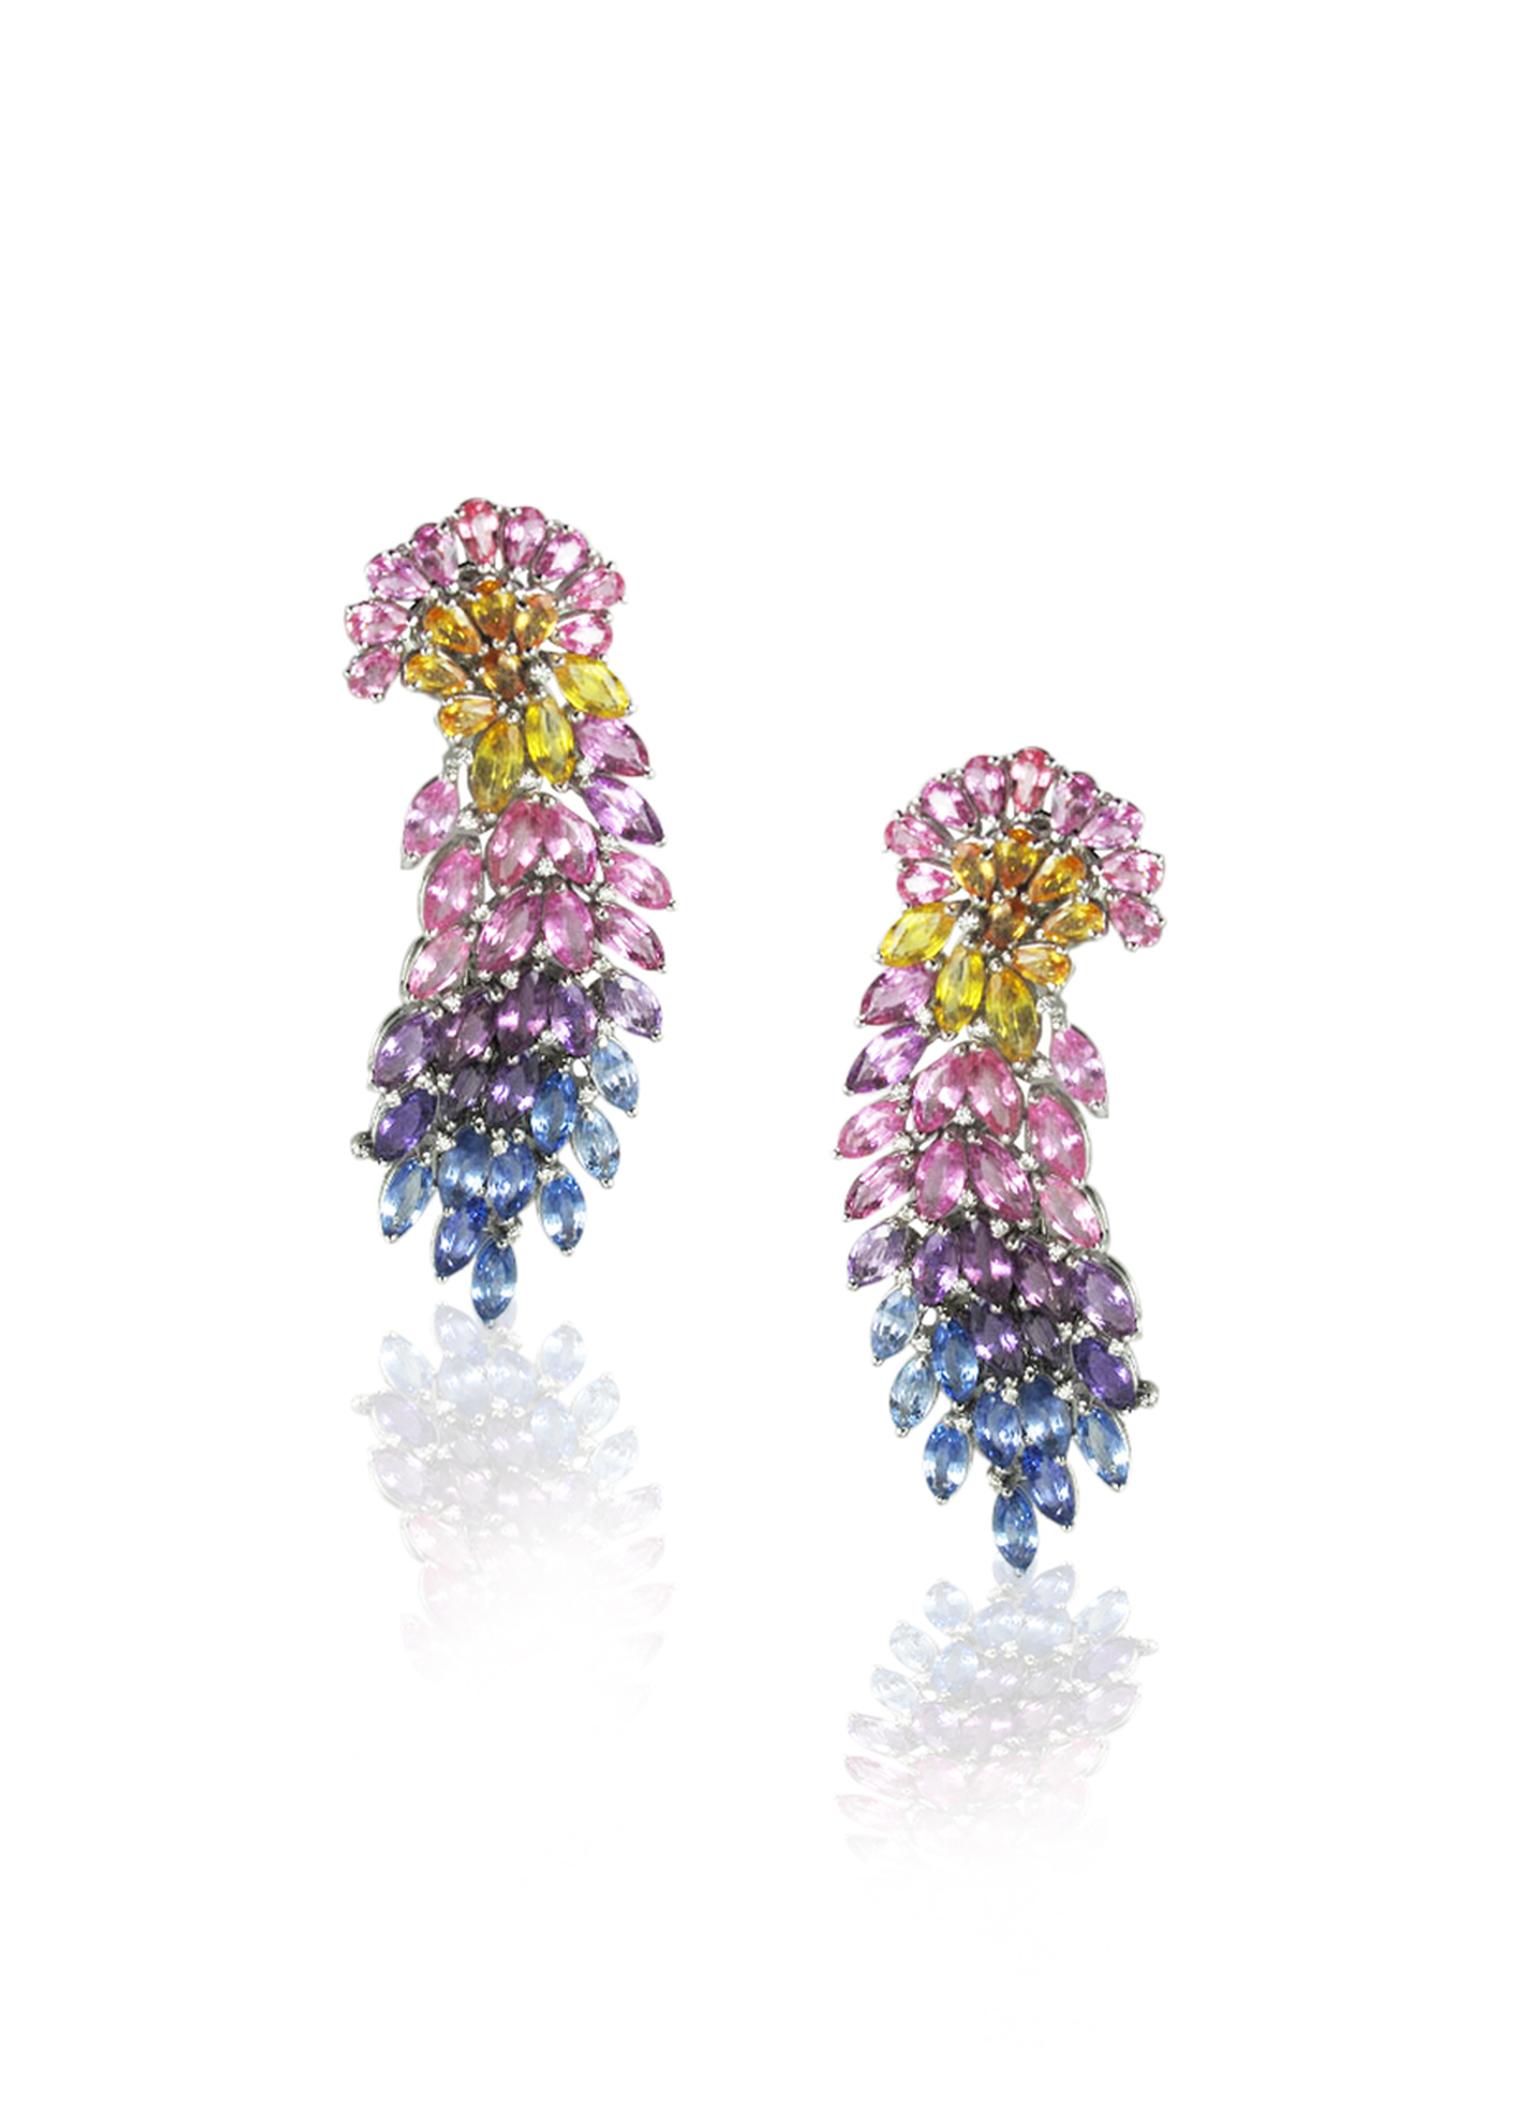 Mirari white gold Waterfall earrings featuring multi-coloured sapphires and white diamonds.